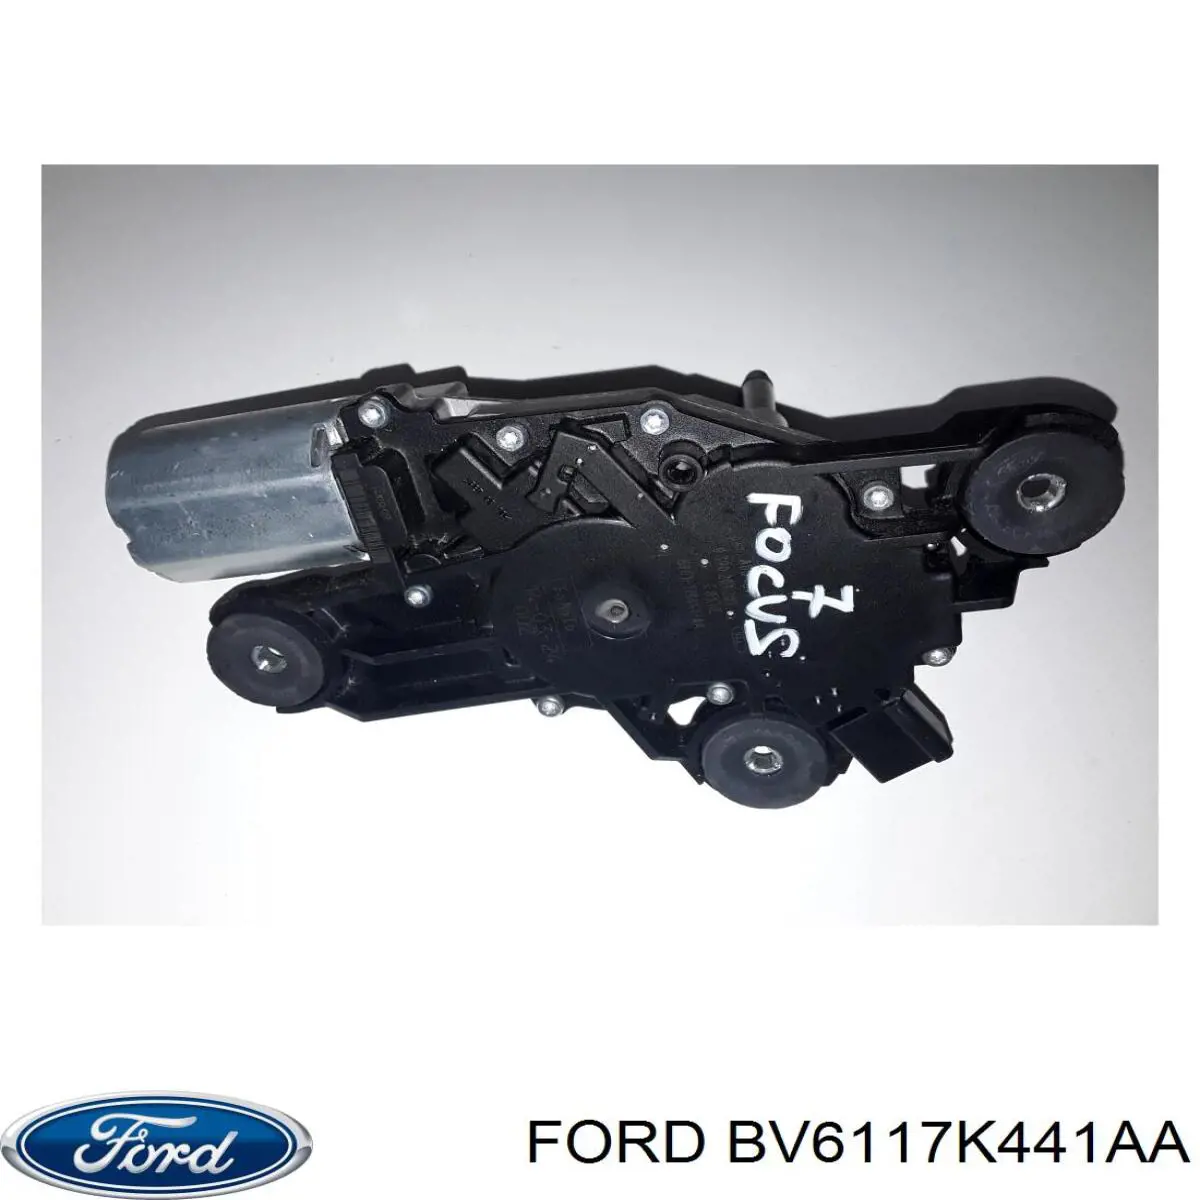 1851421 Ford motor limpiaparabrisas, trasera